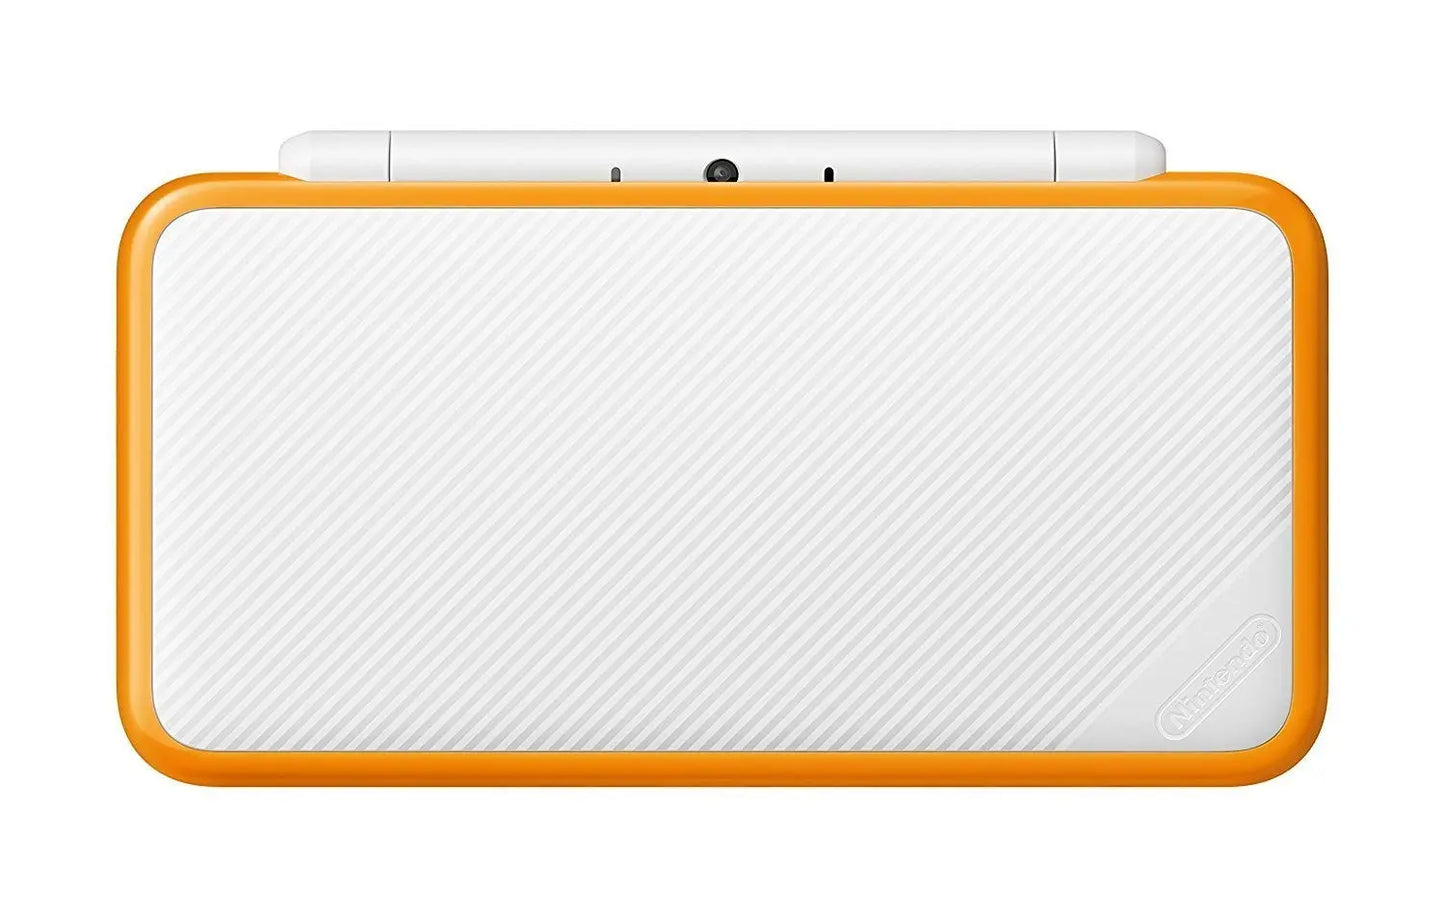 Nintendo New 2DS XL (Blanche et orange ) 0045496504564 nintendo